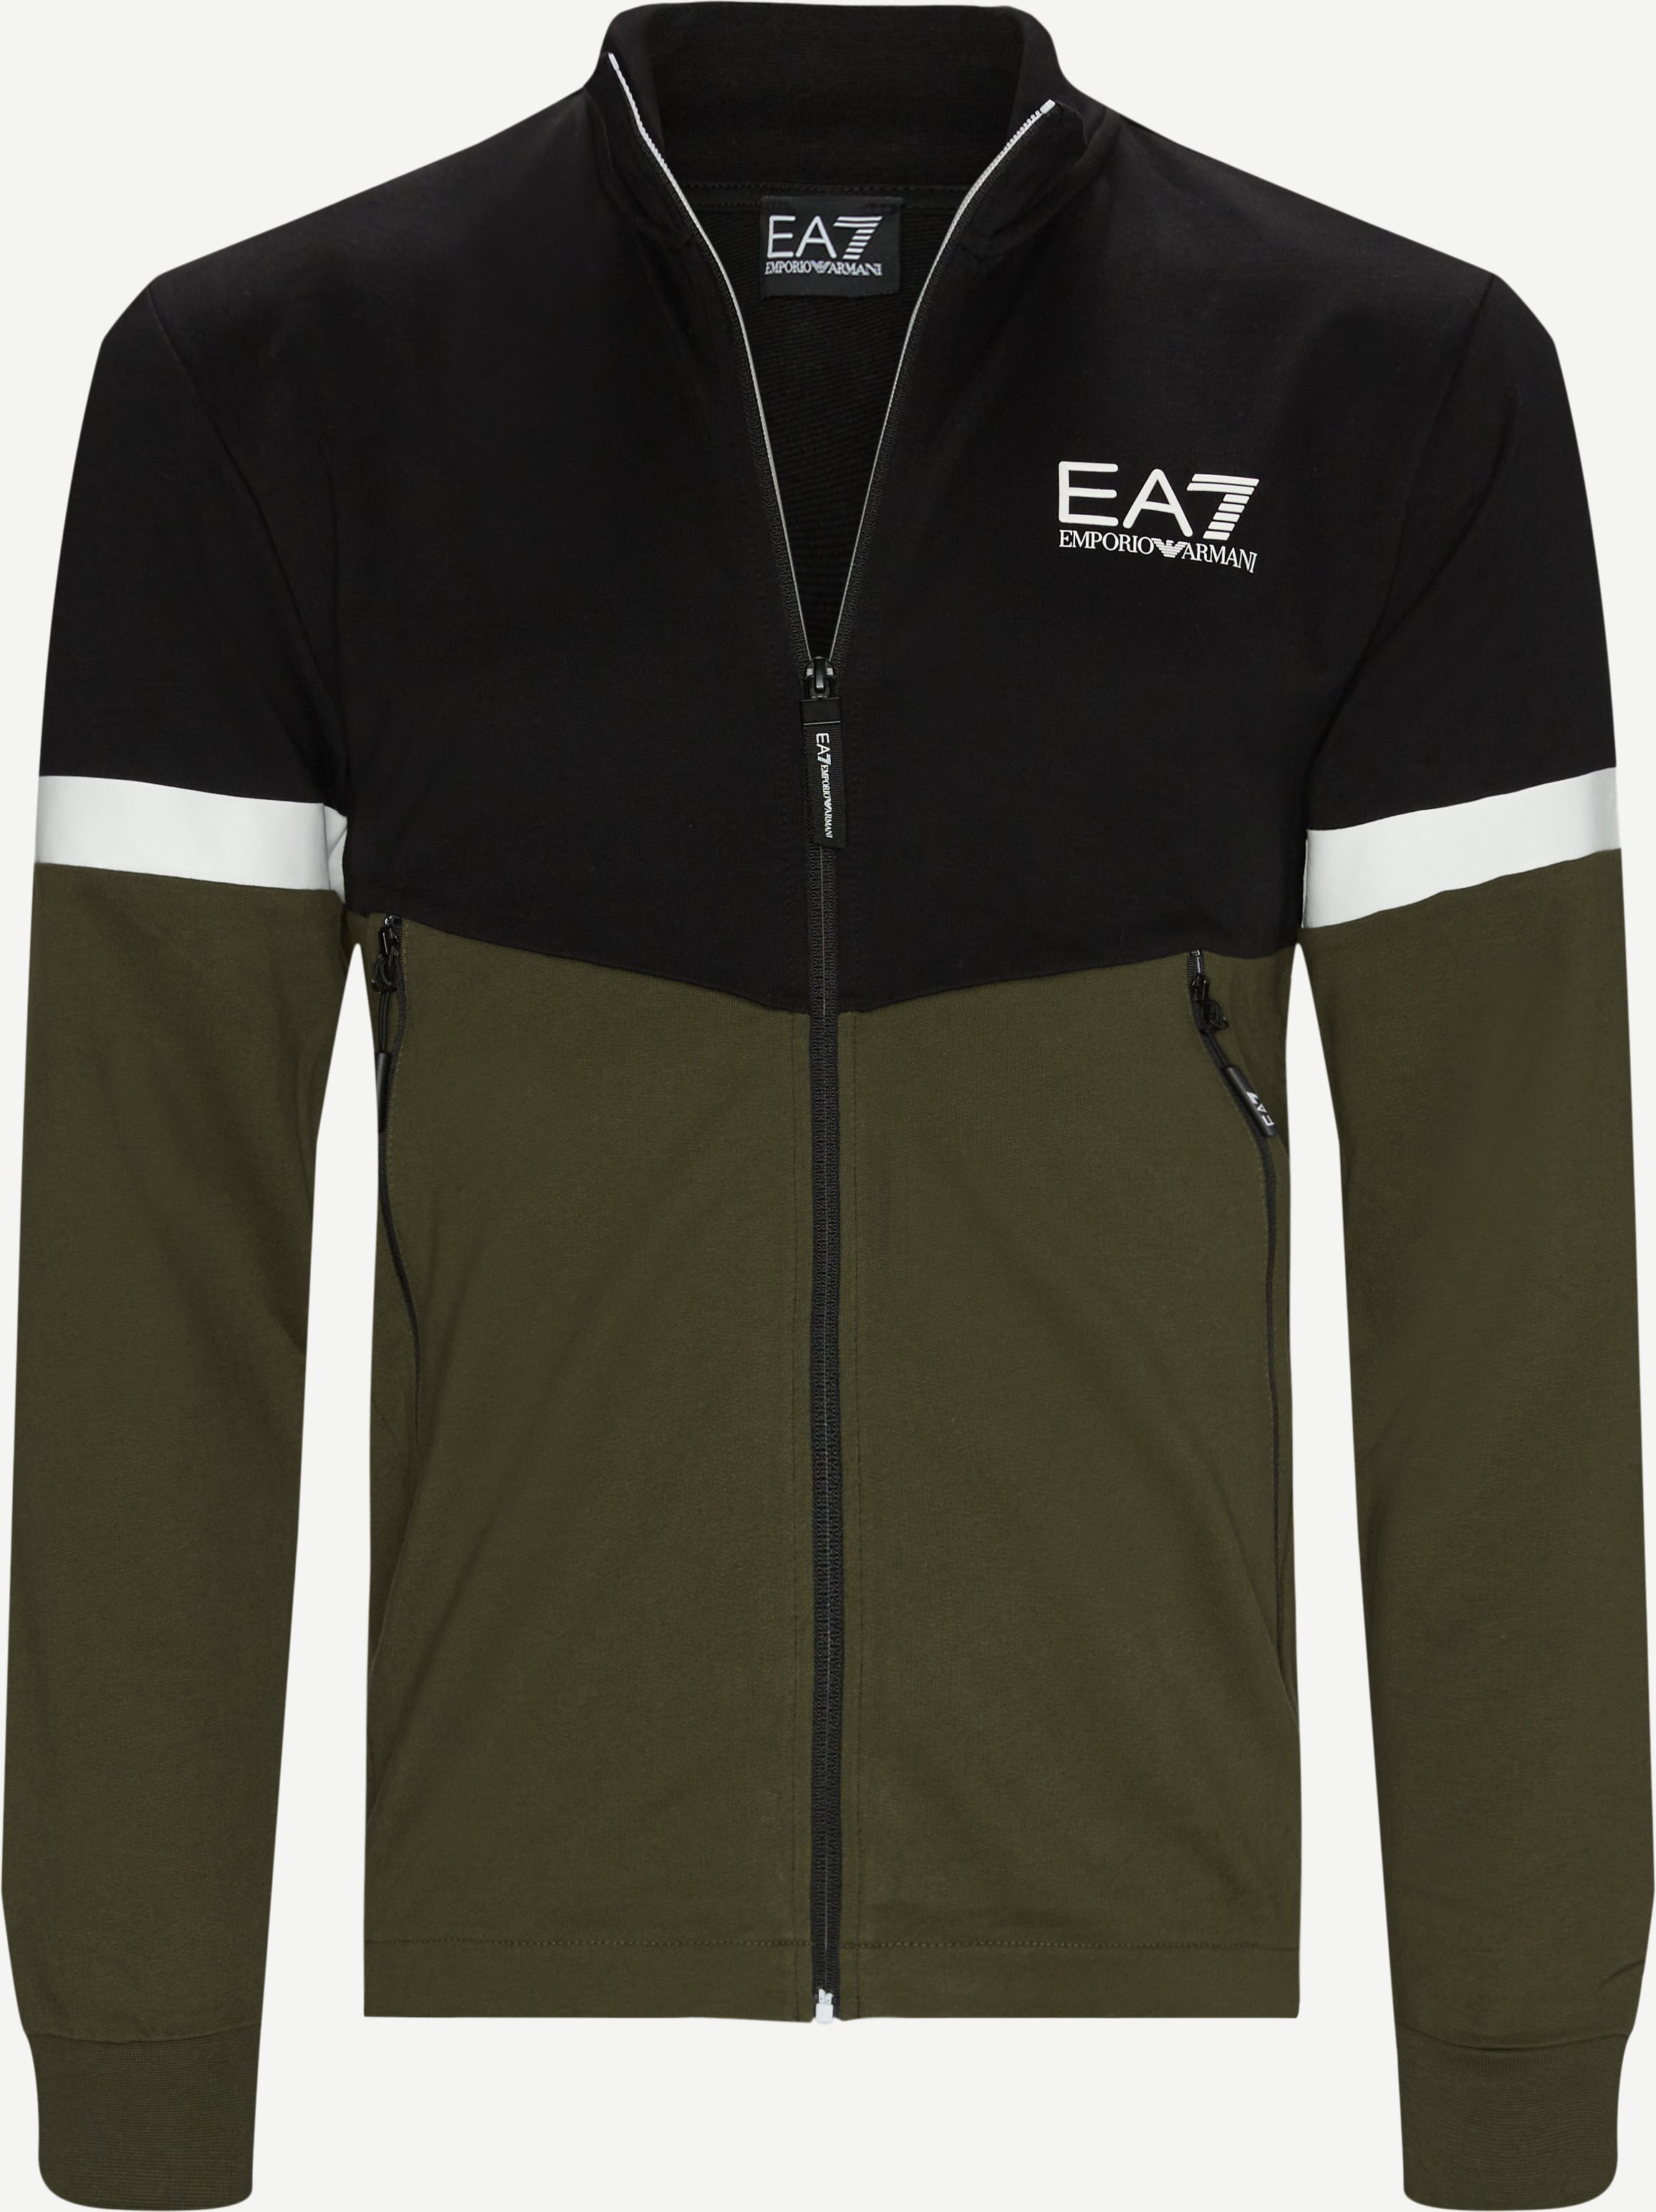 6KPV64 Zip Sweatshirt - Sweatshirts - Regular fit - Army